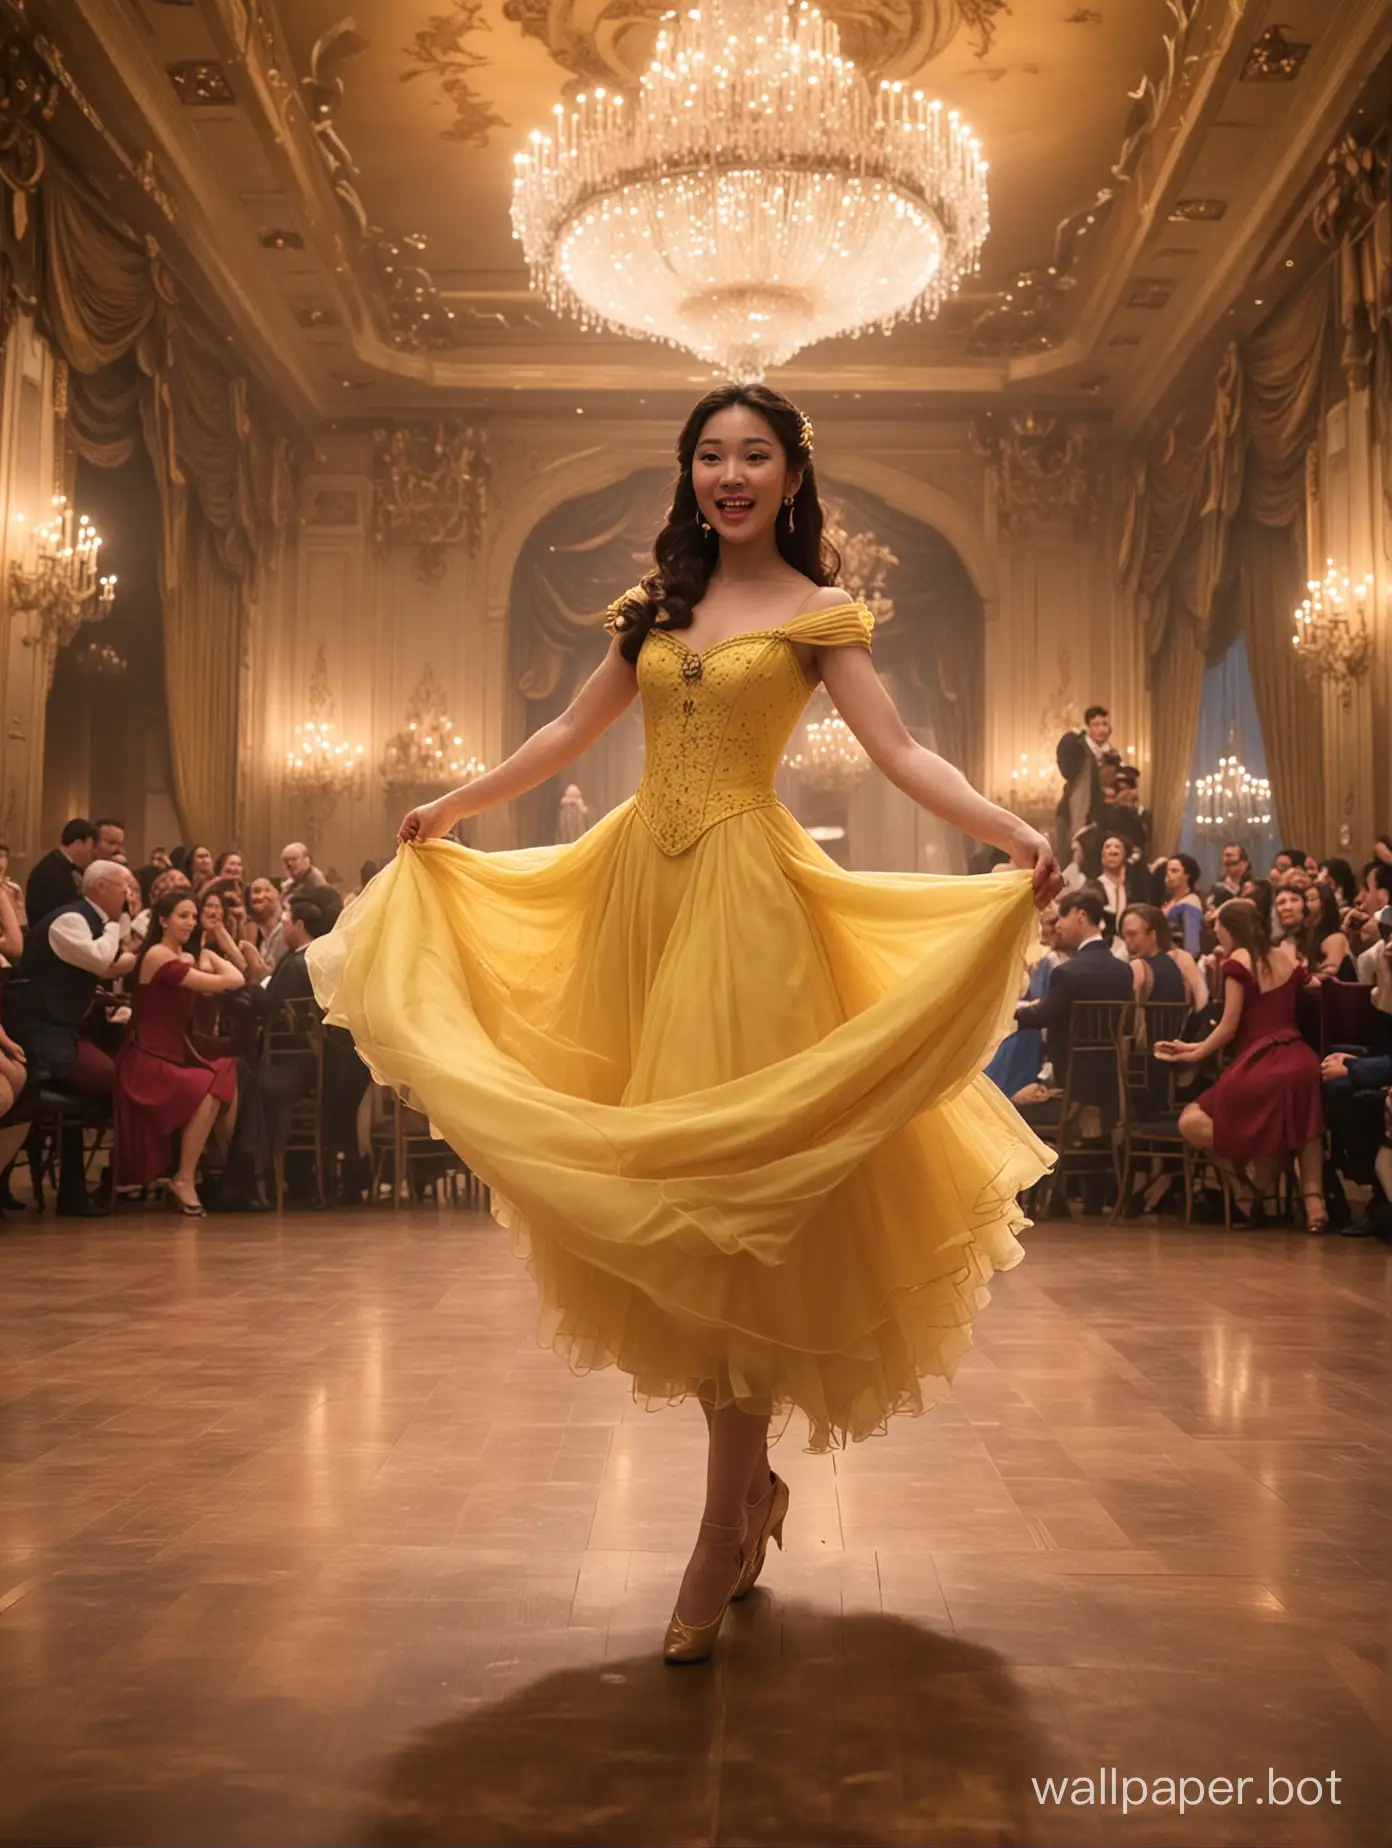 Elegant-Asian-Belle-Dancing-in-Enchanted-Ballroom